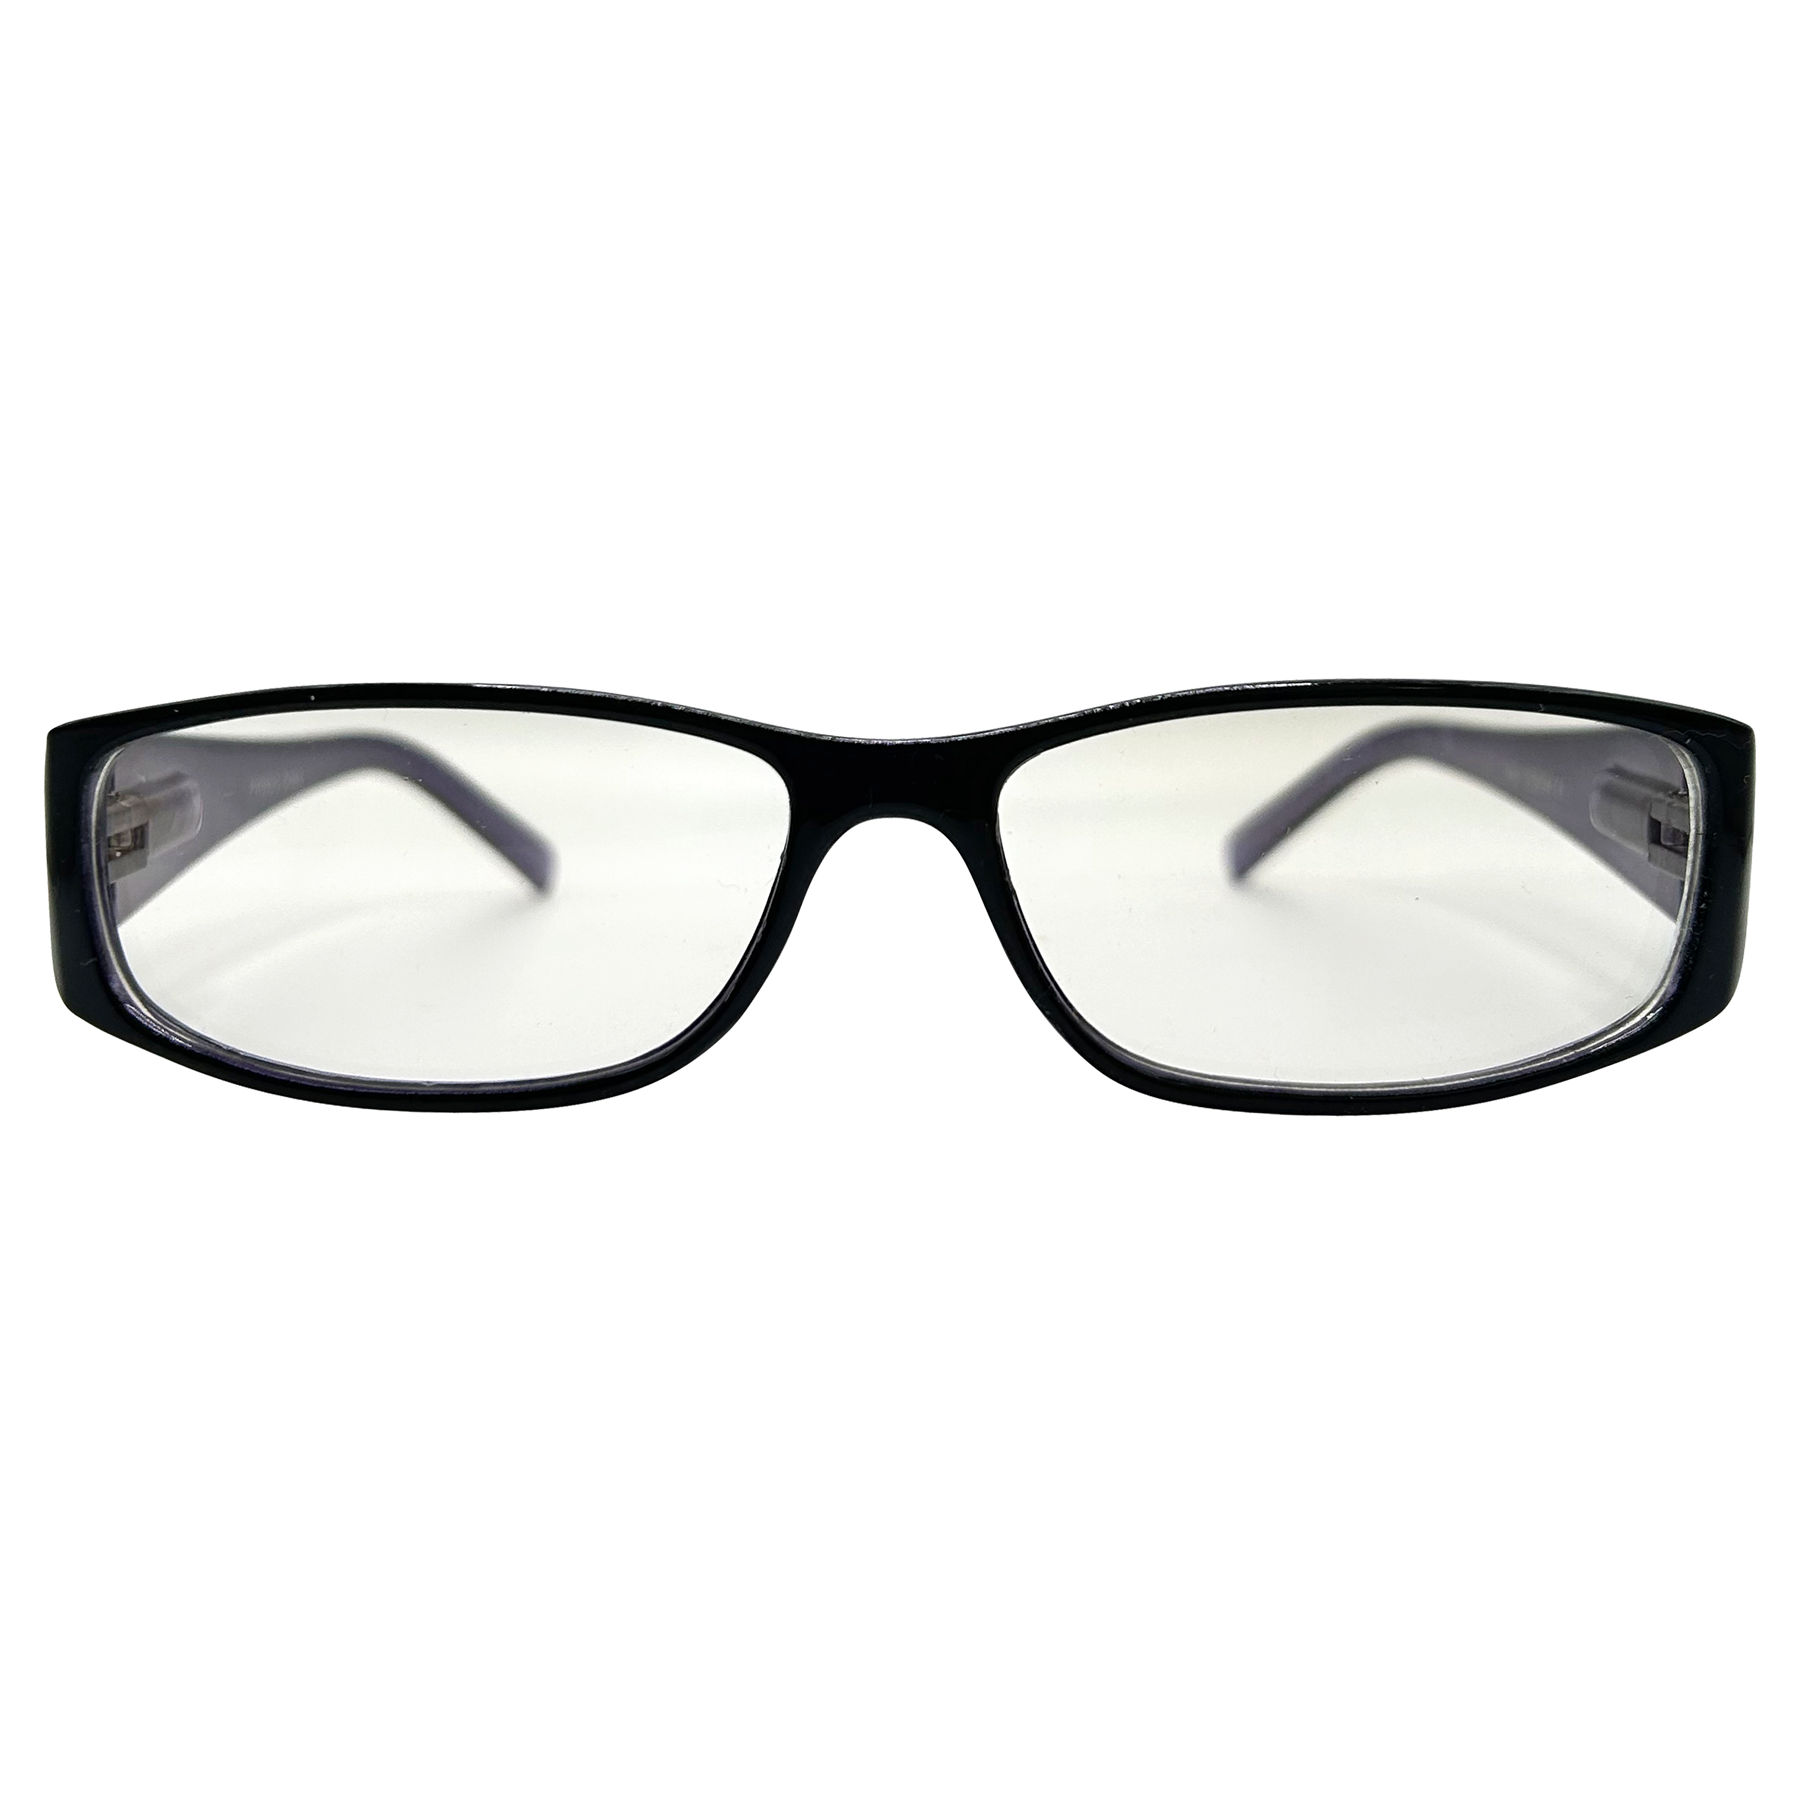 LATER GATOR Bayonetta-Style Clear Glasses